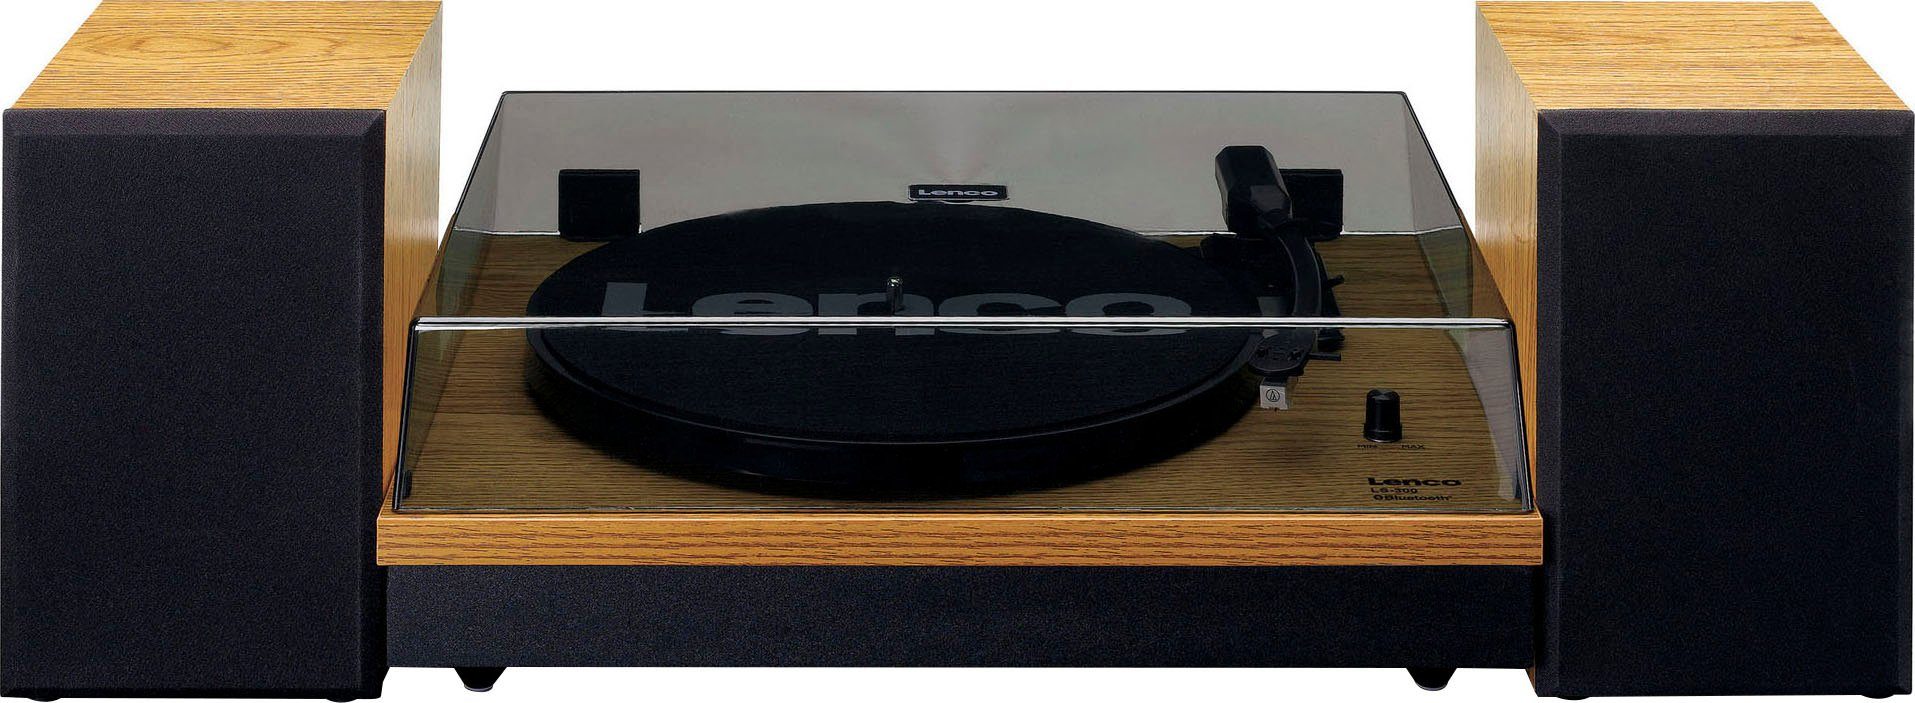 LS-300WD ext. Holz Lenco mit Lautsprechern Plattenspieler (Riemenantrieb) Plattenspieler